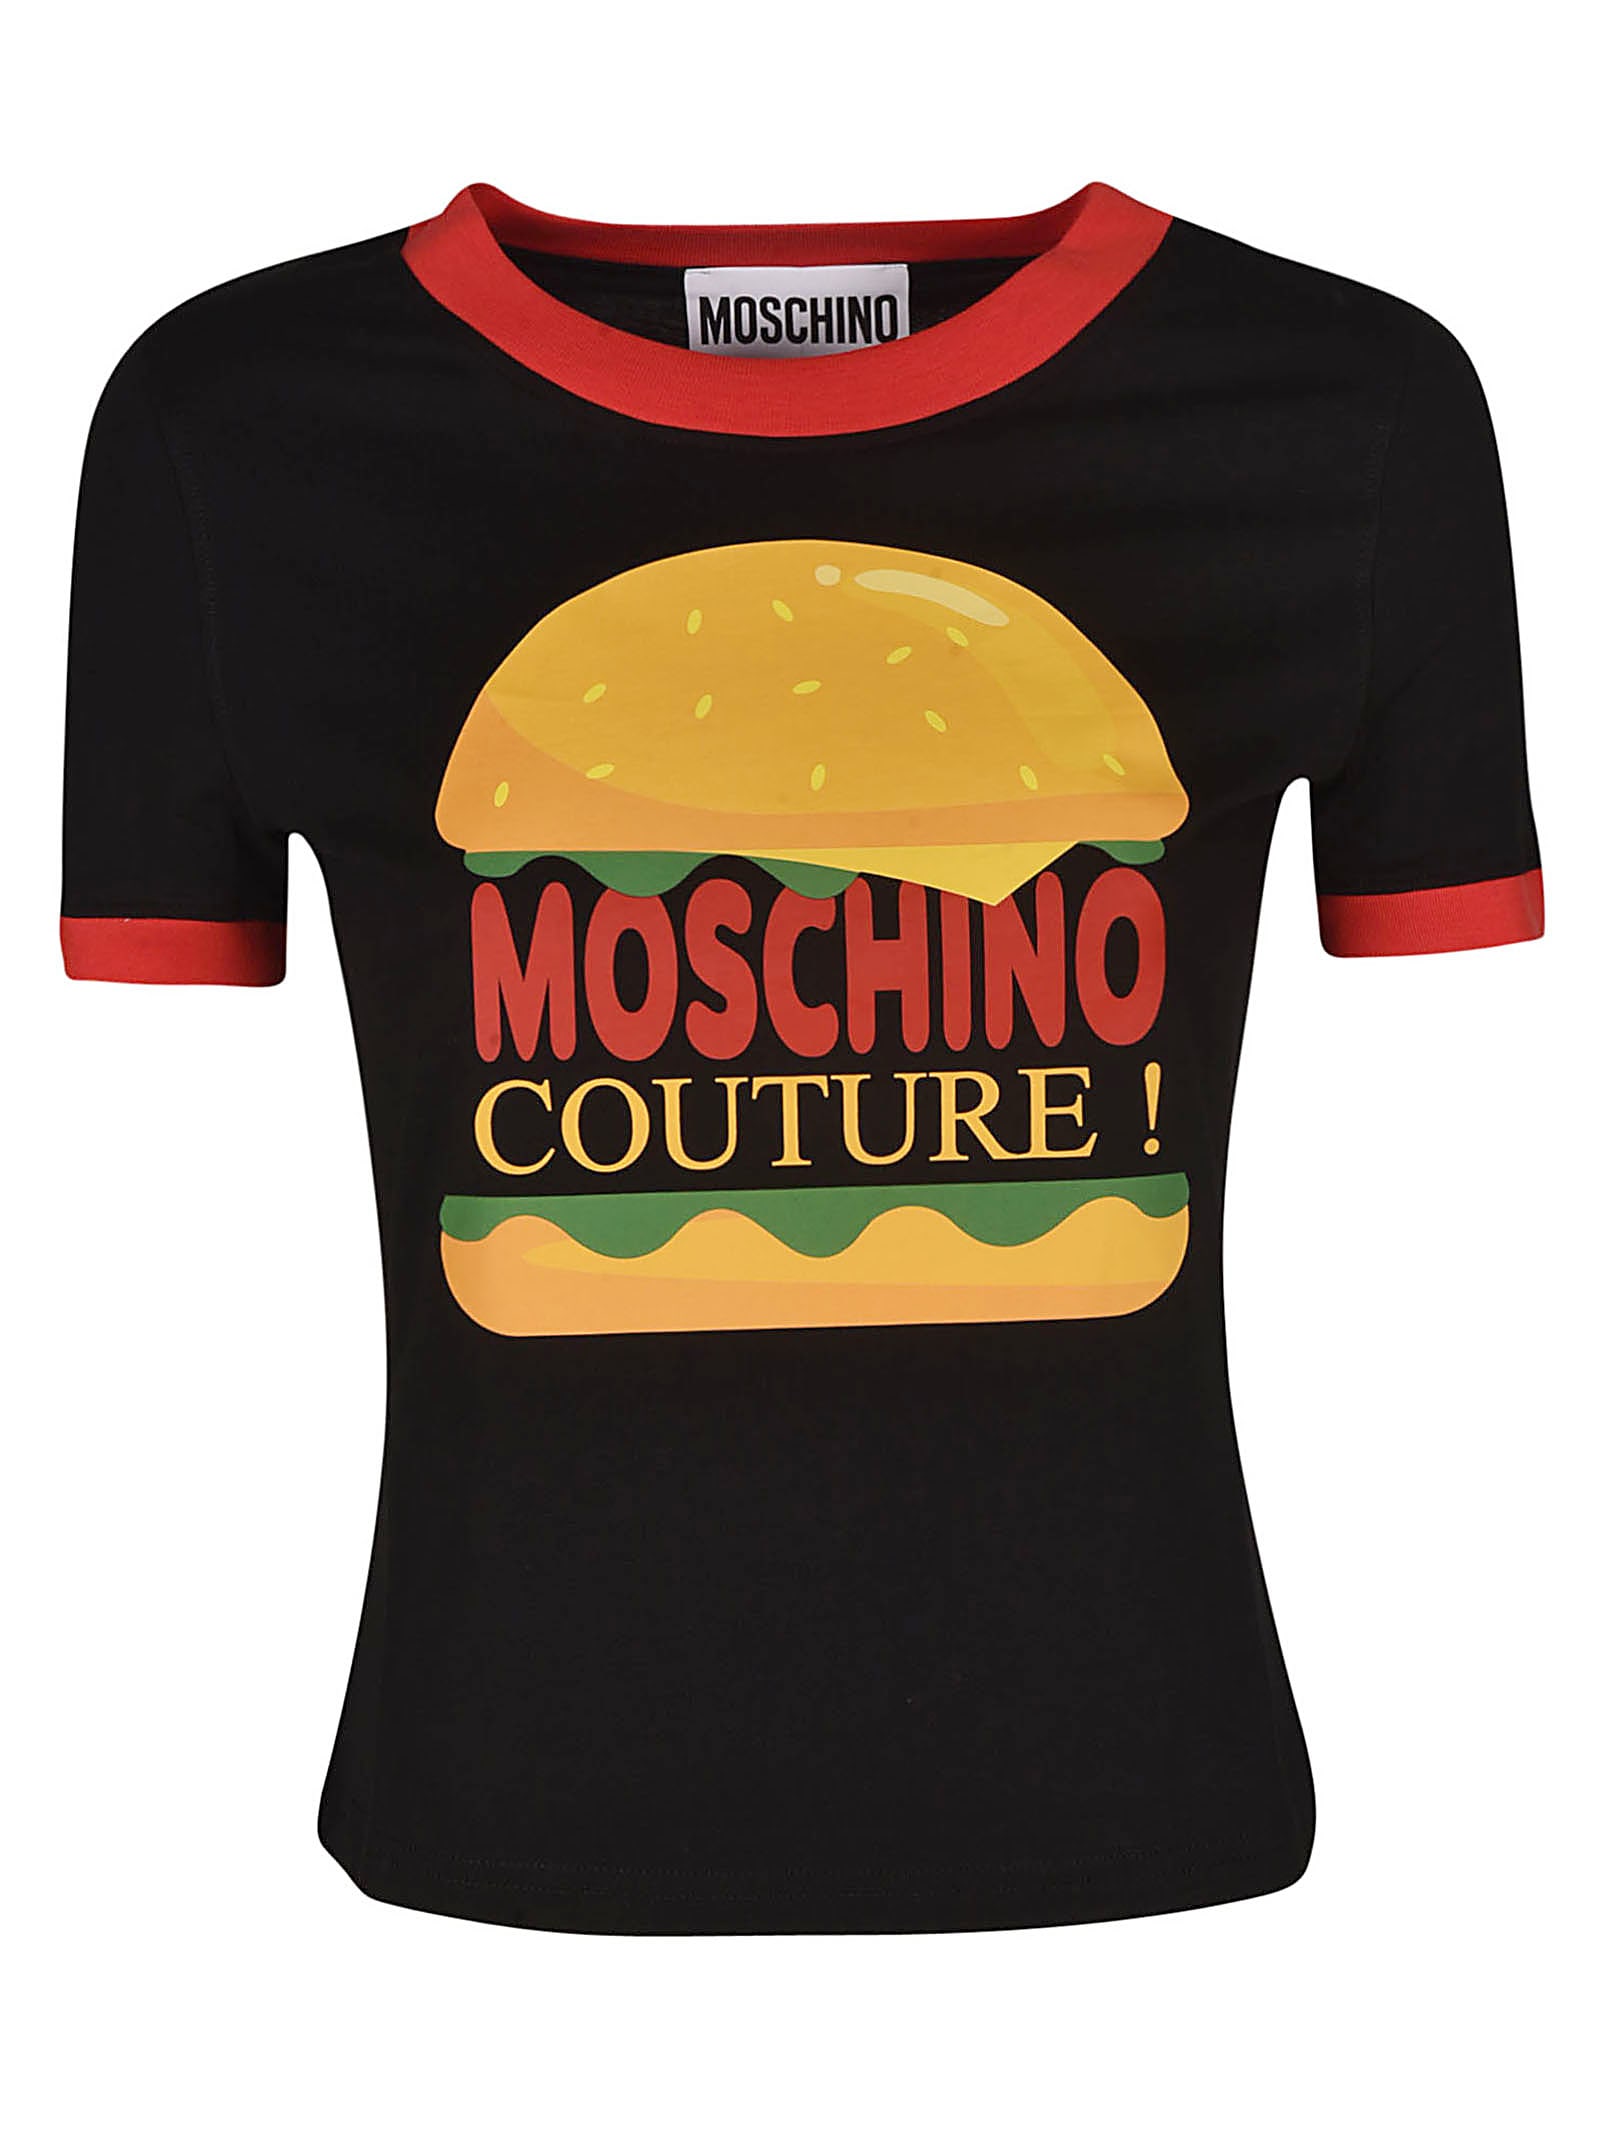 Moschino Couture! Burger T-shirt